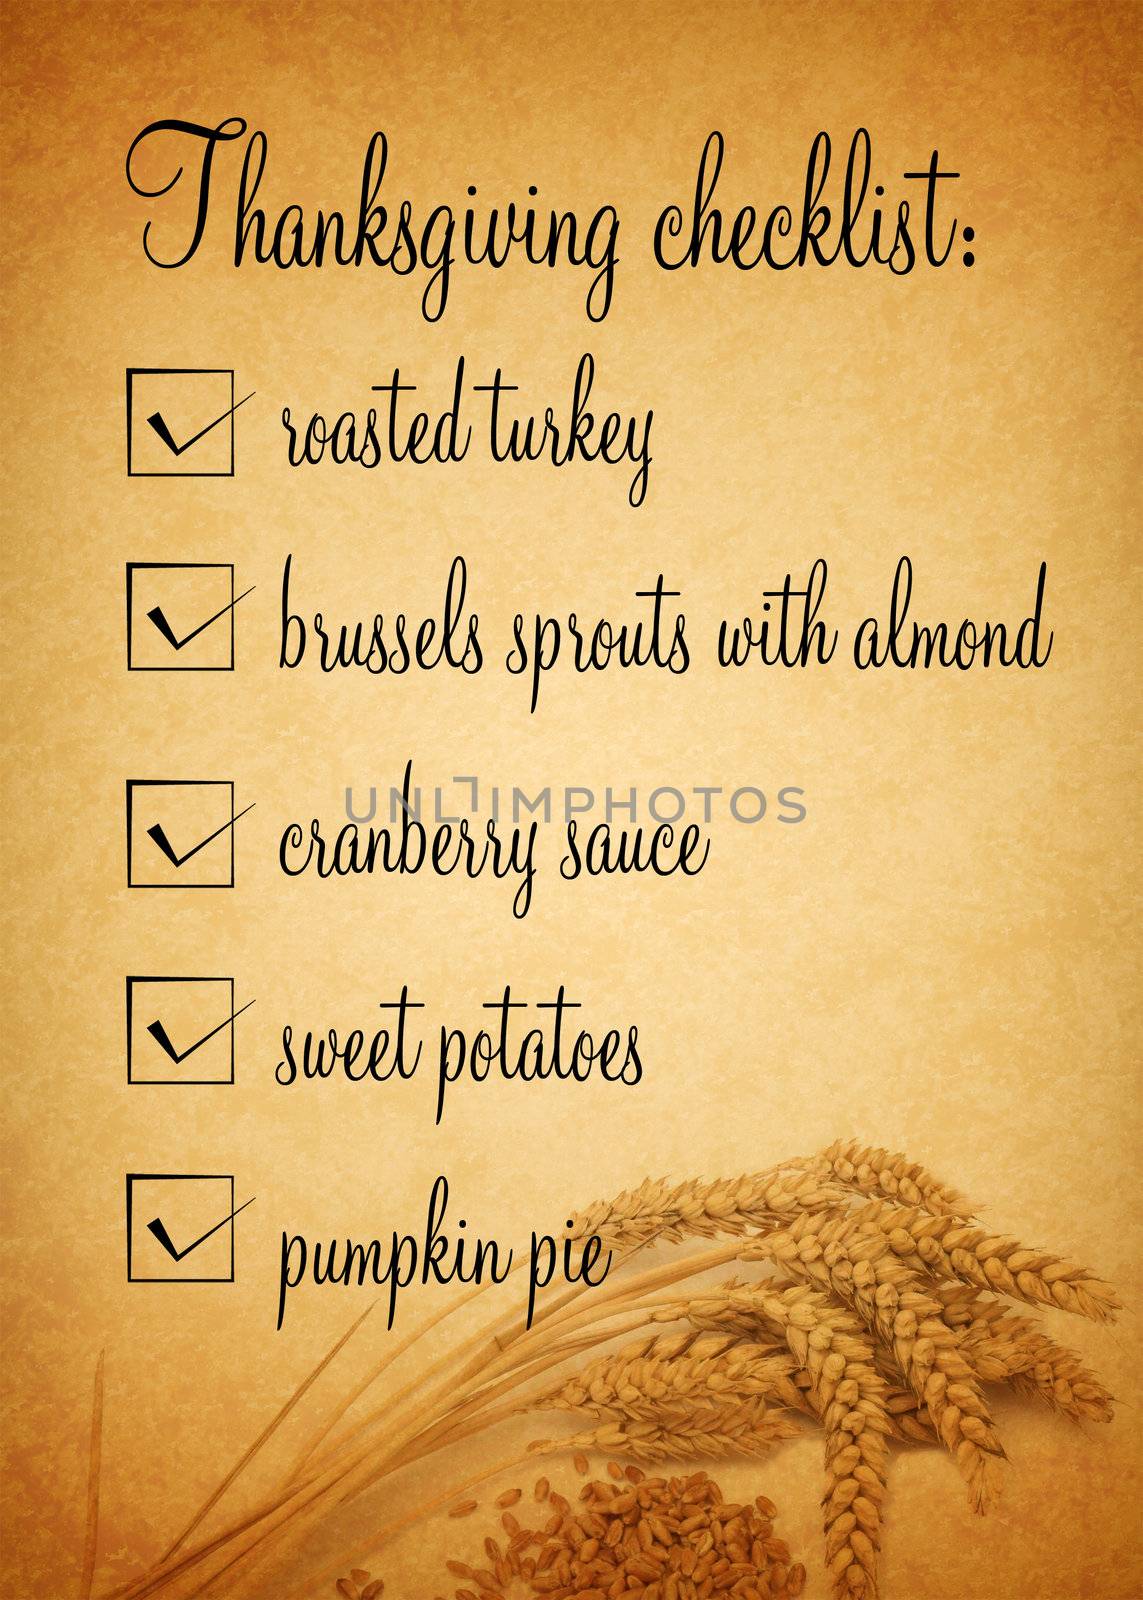 Thanksgiving Checklist by SorayaShan